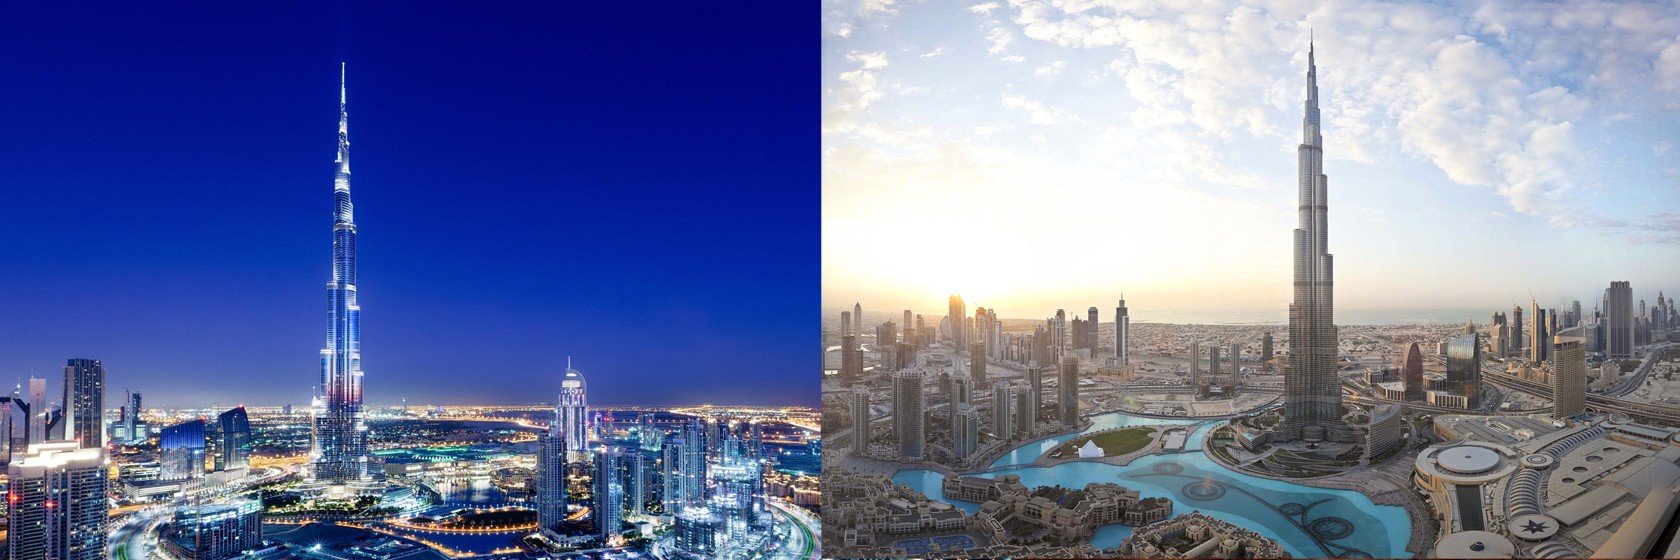 Banner Image of Burj Khalifa Dubai